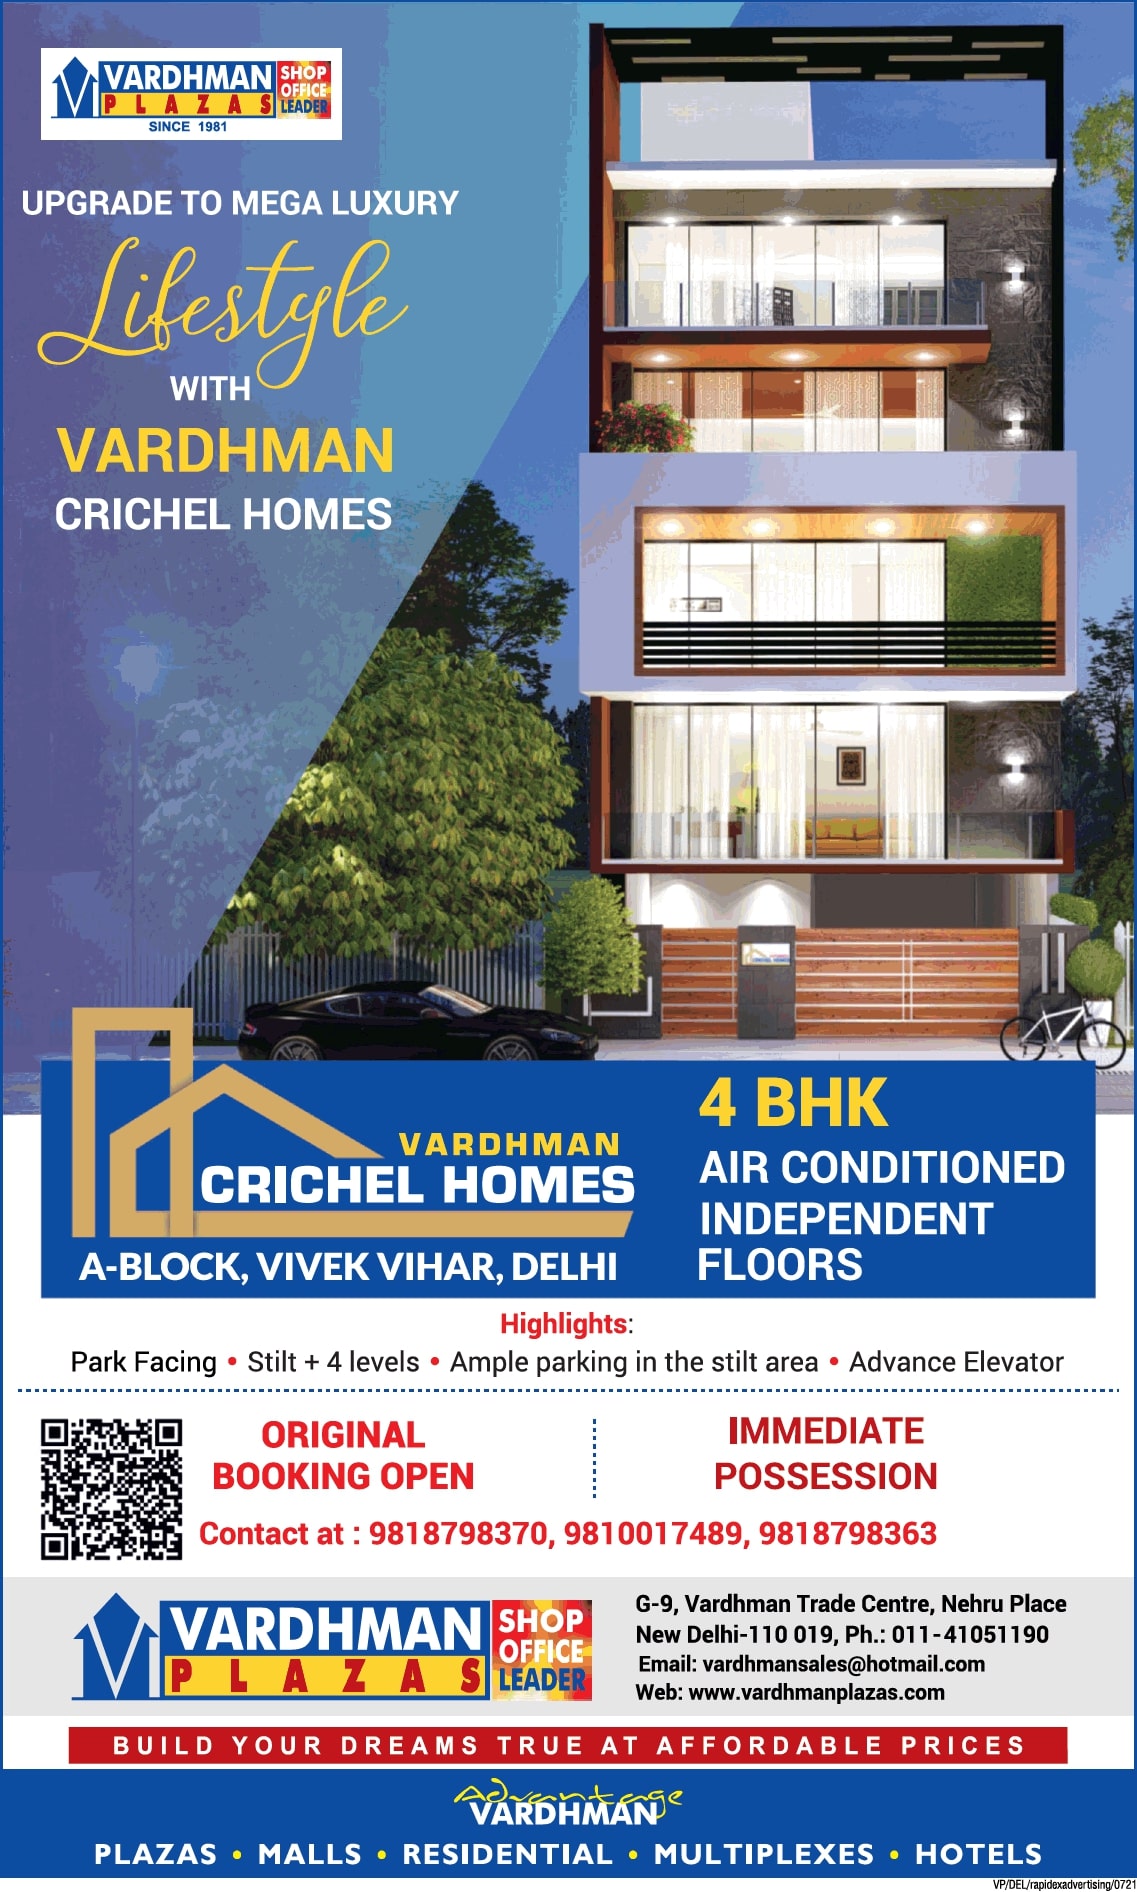 vardhman-plazas-upgrade-to-mega-luxury-lifestyle-with-varddhman-crichel-homes-ad-delhi-times-03-07-2021